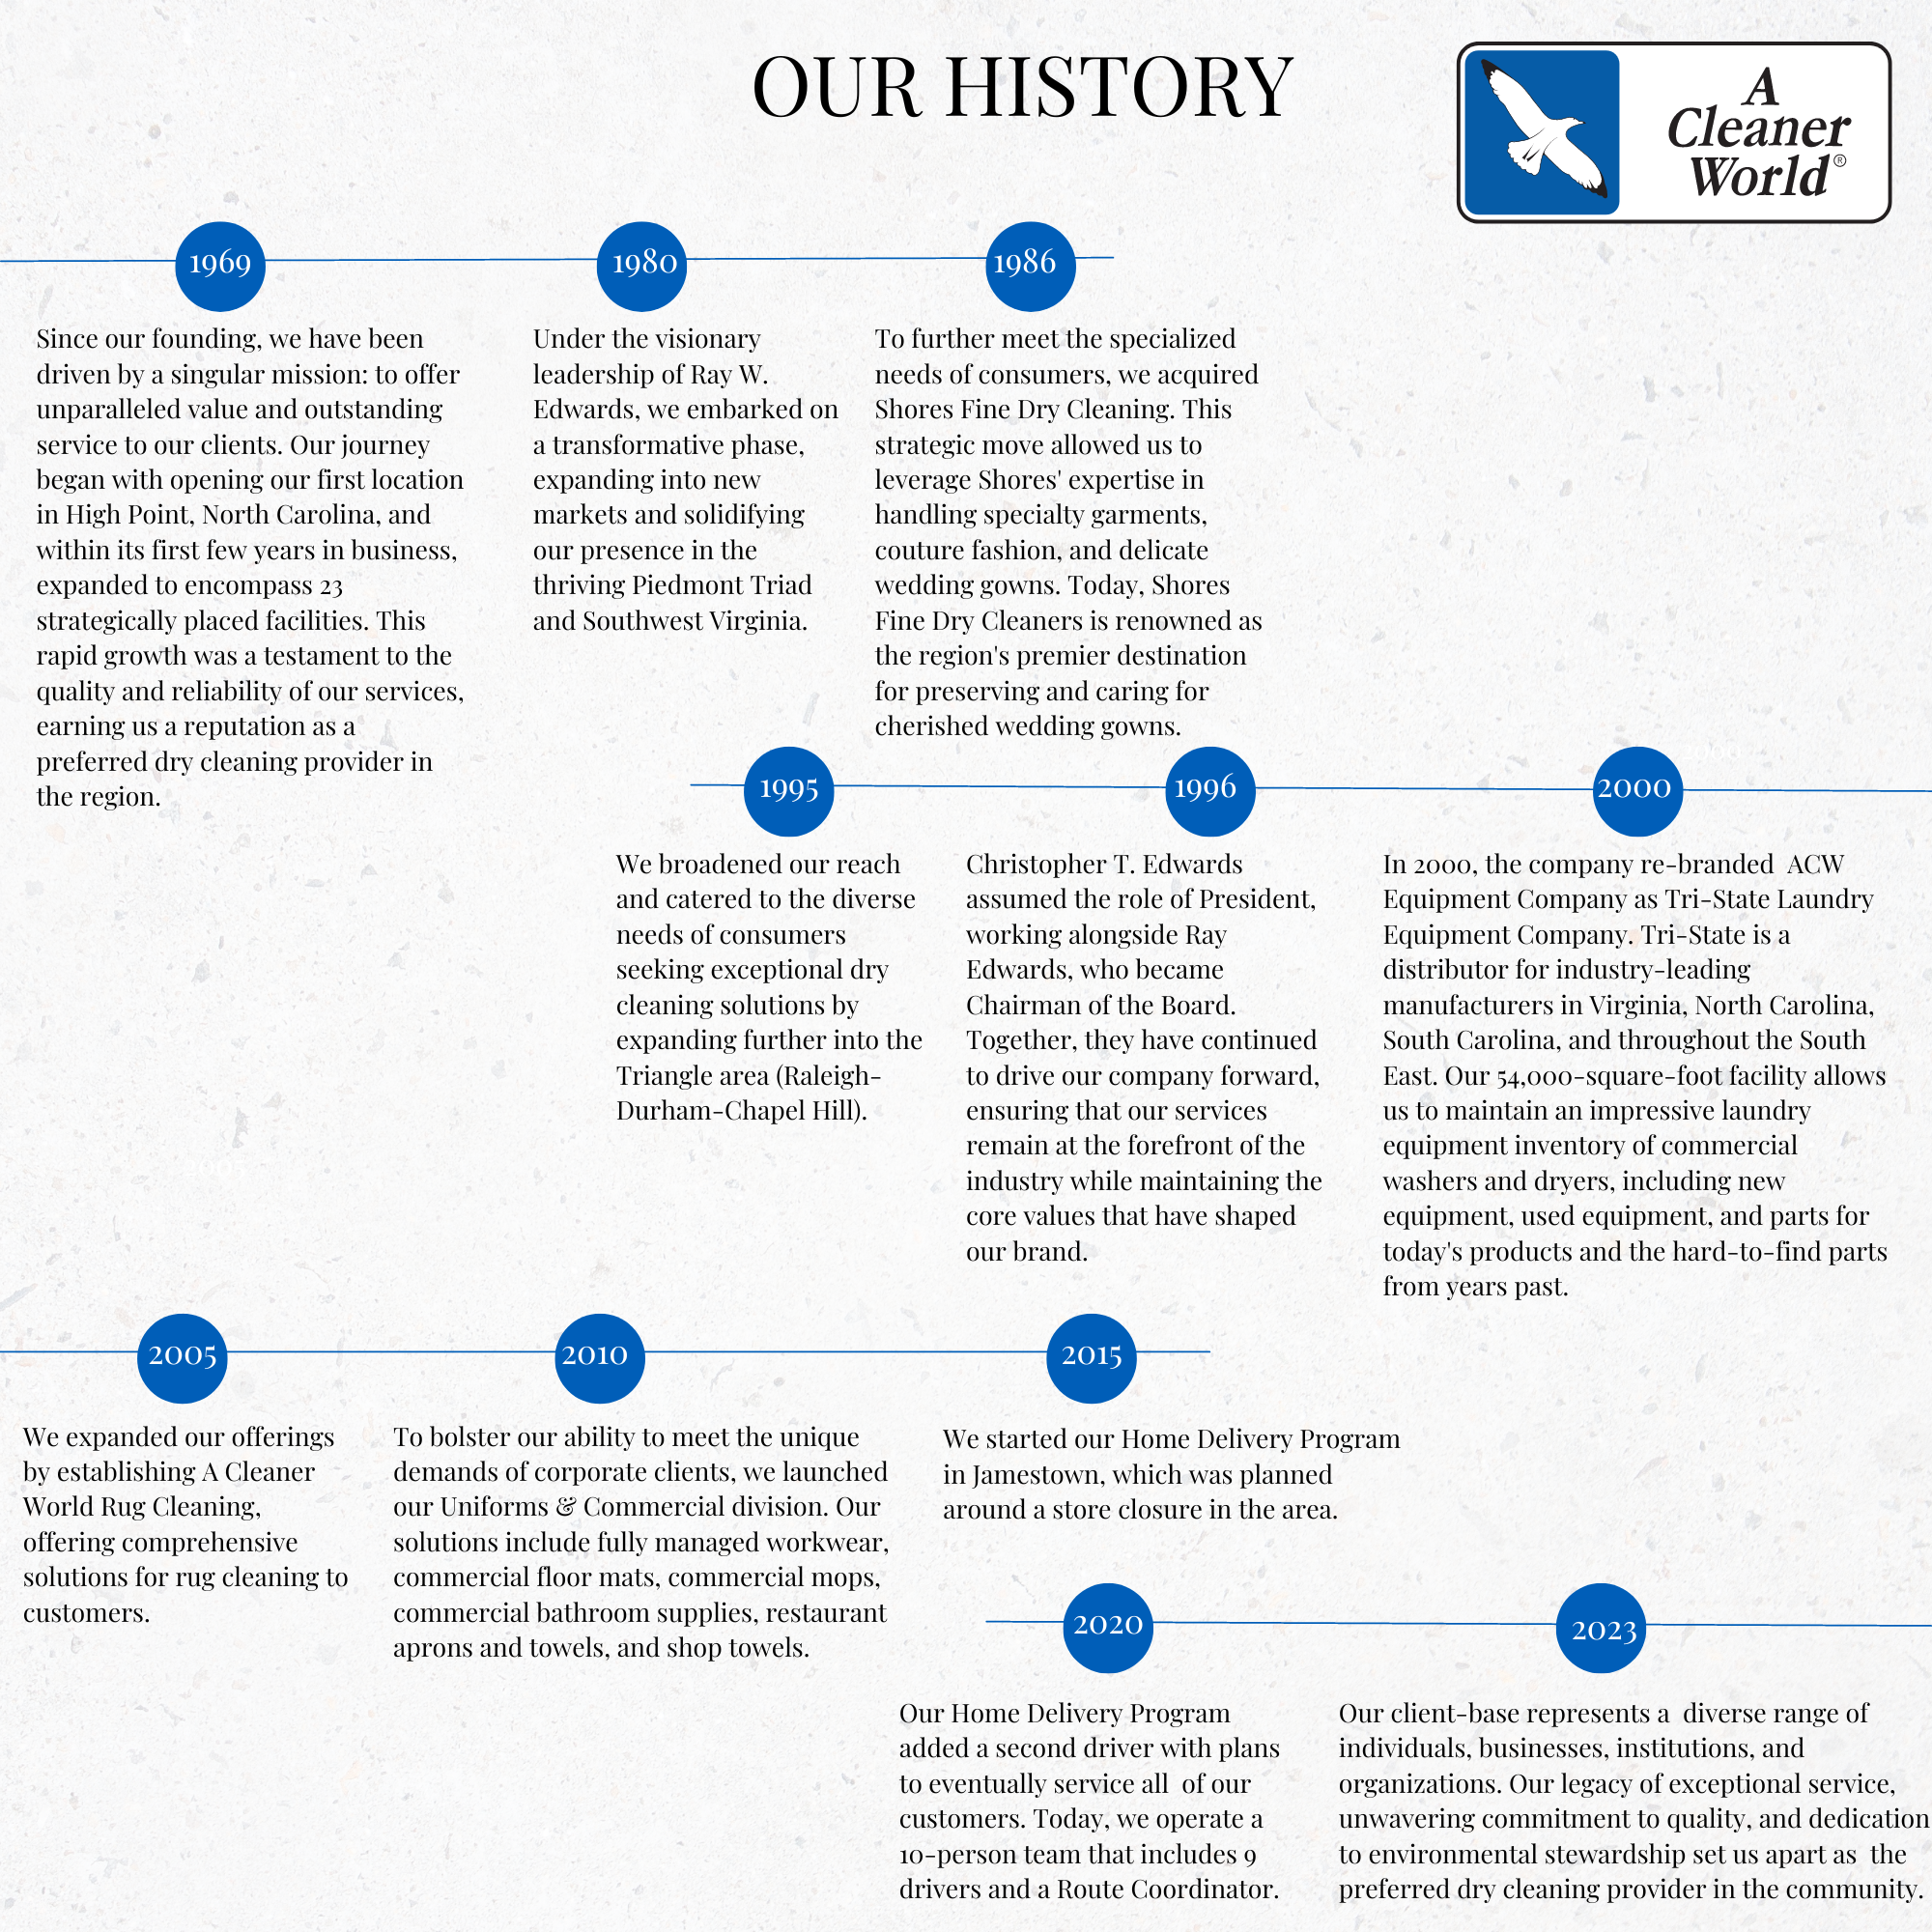 a cleaner world historical timeline